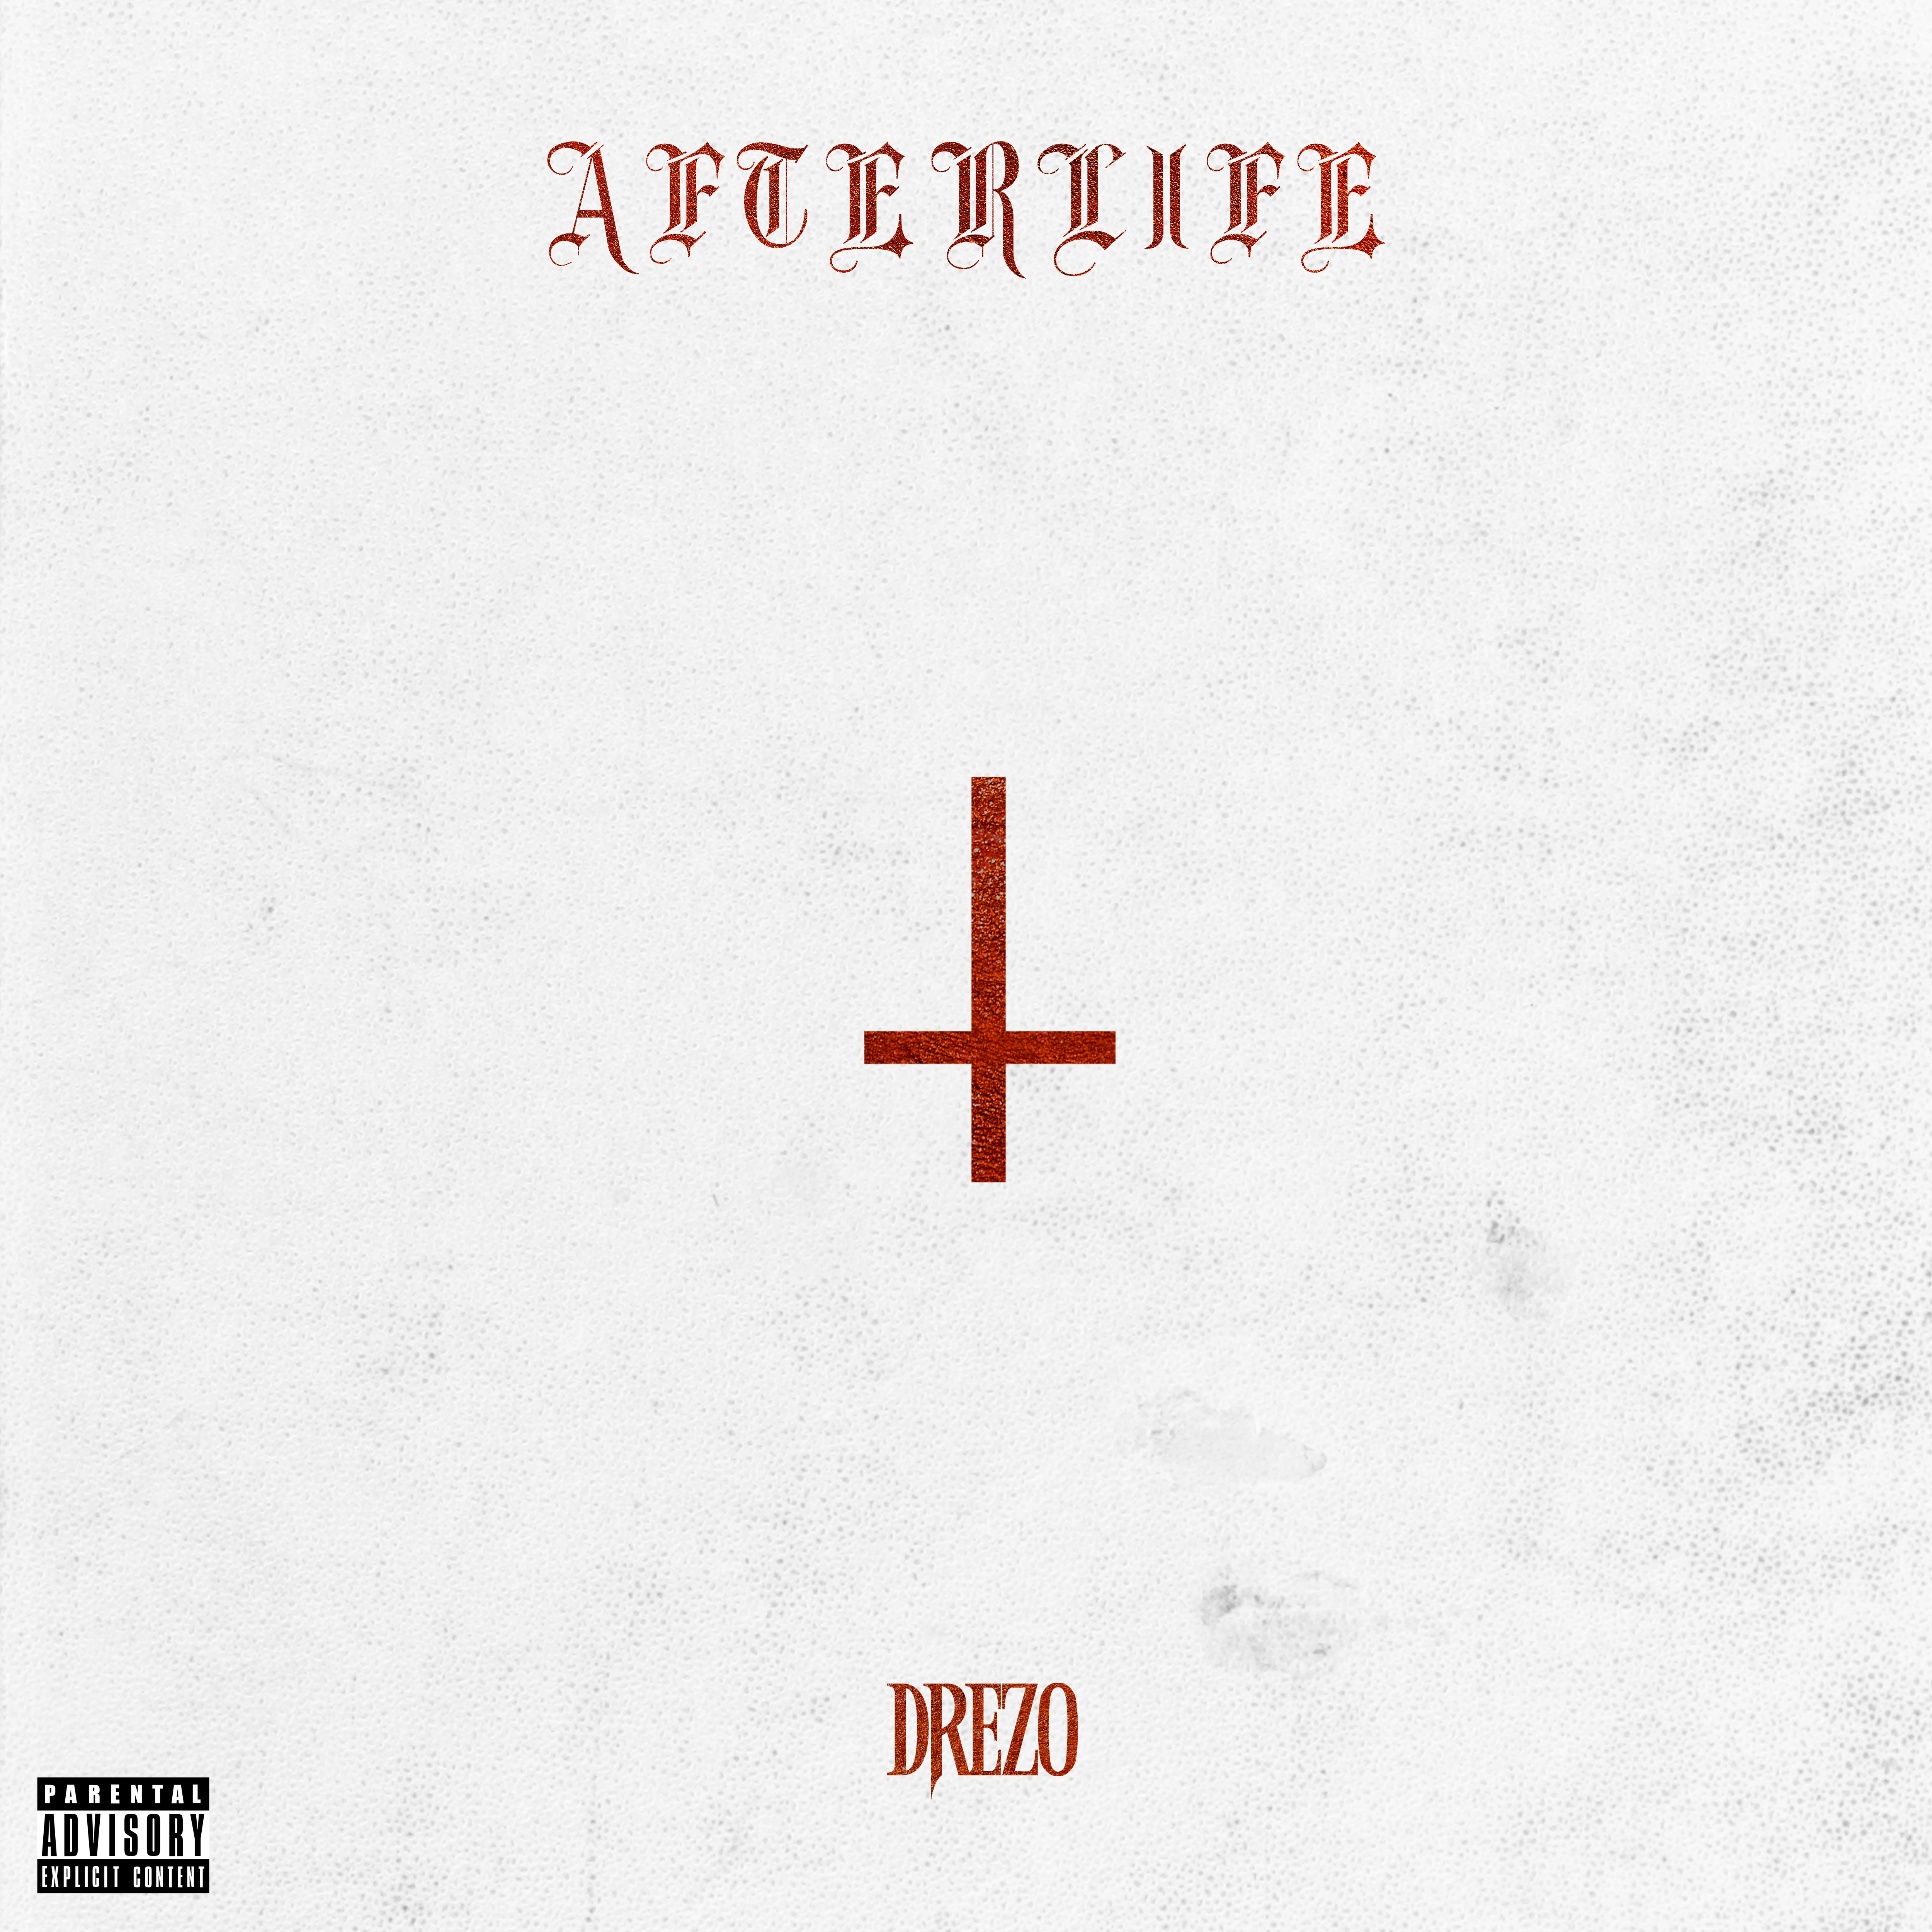 DREZO Announces New EP, Teases Single “Afterlife”